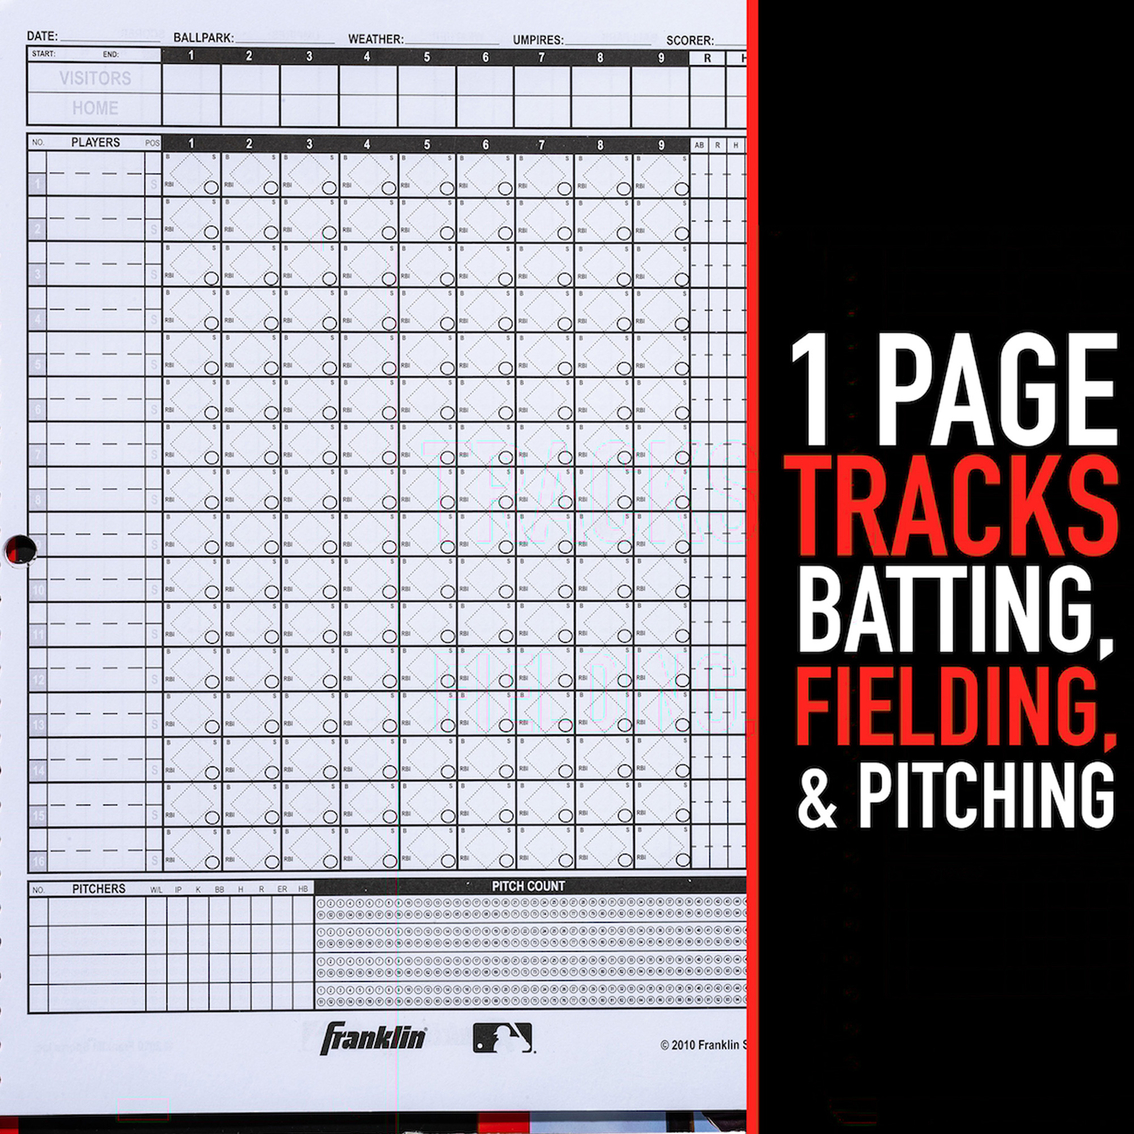 Franklin MLB Baseball and Softball Scorebook - Image 3 of 6